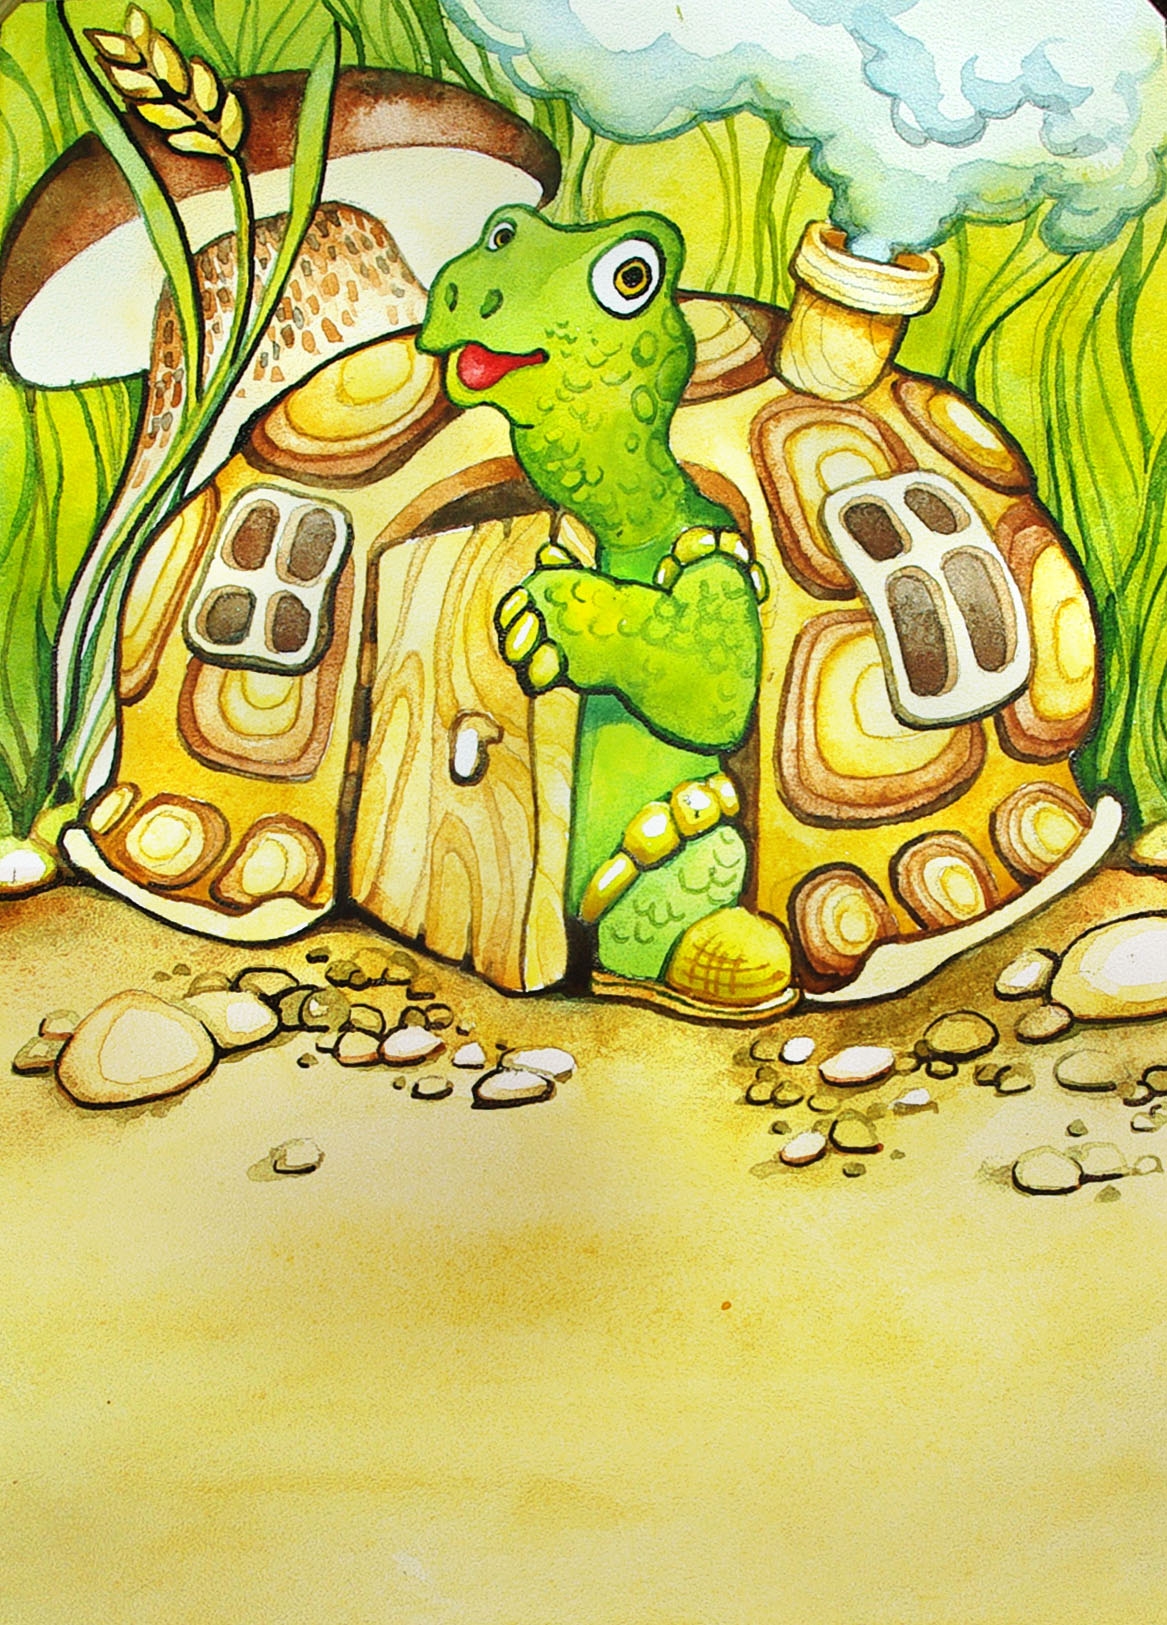 Читай про черепаху. Черепаха Тортилла. Черепаха Тортилла из Буратино. Сказочная черепаха. Черепаха мультяшная.